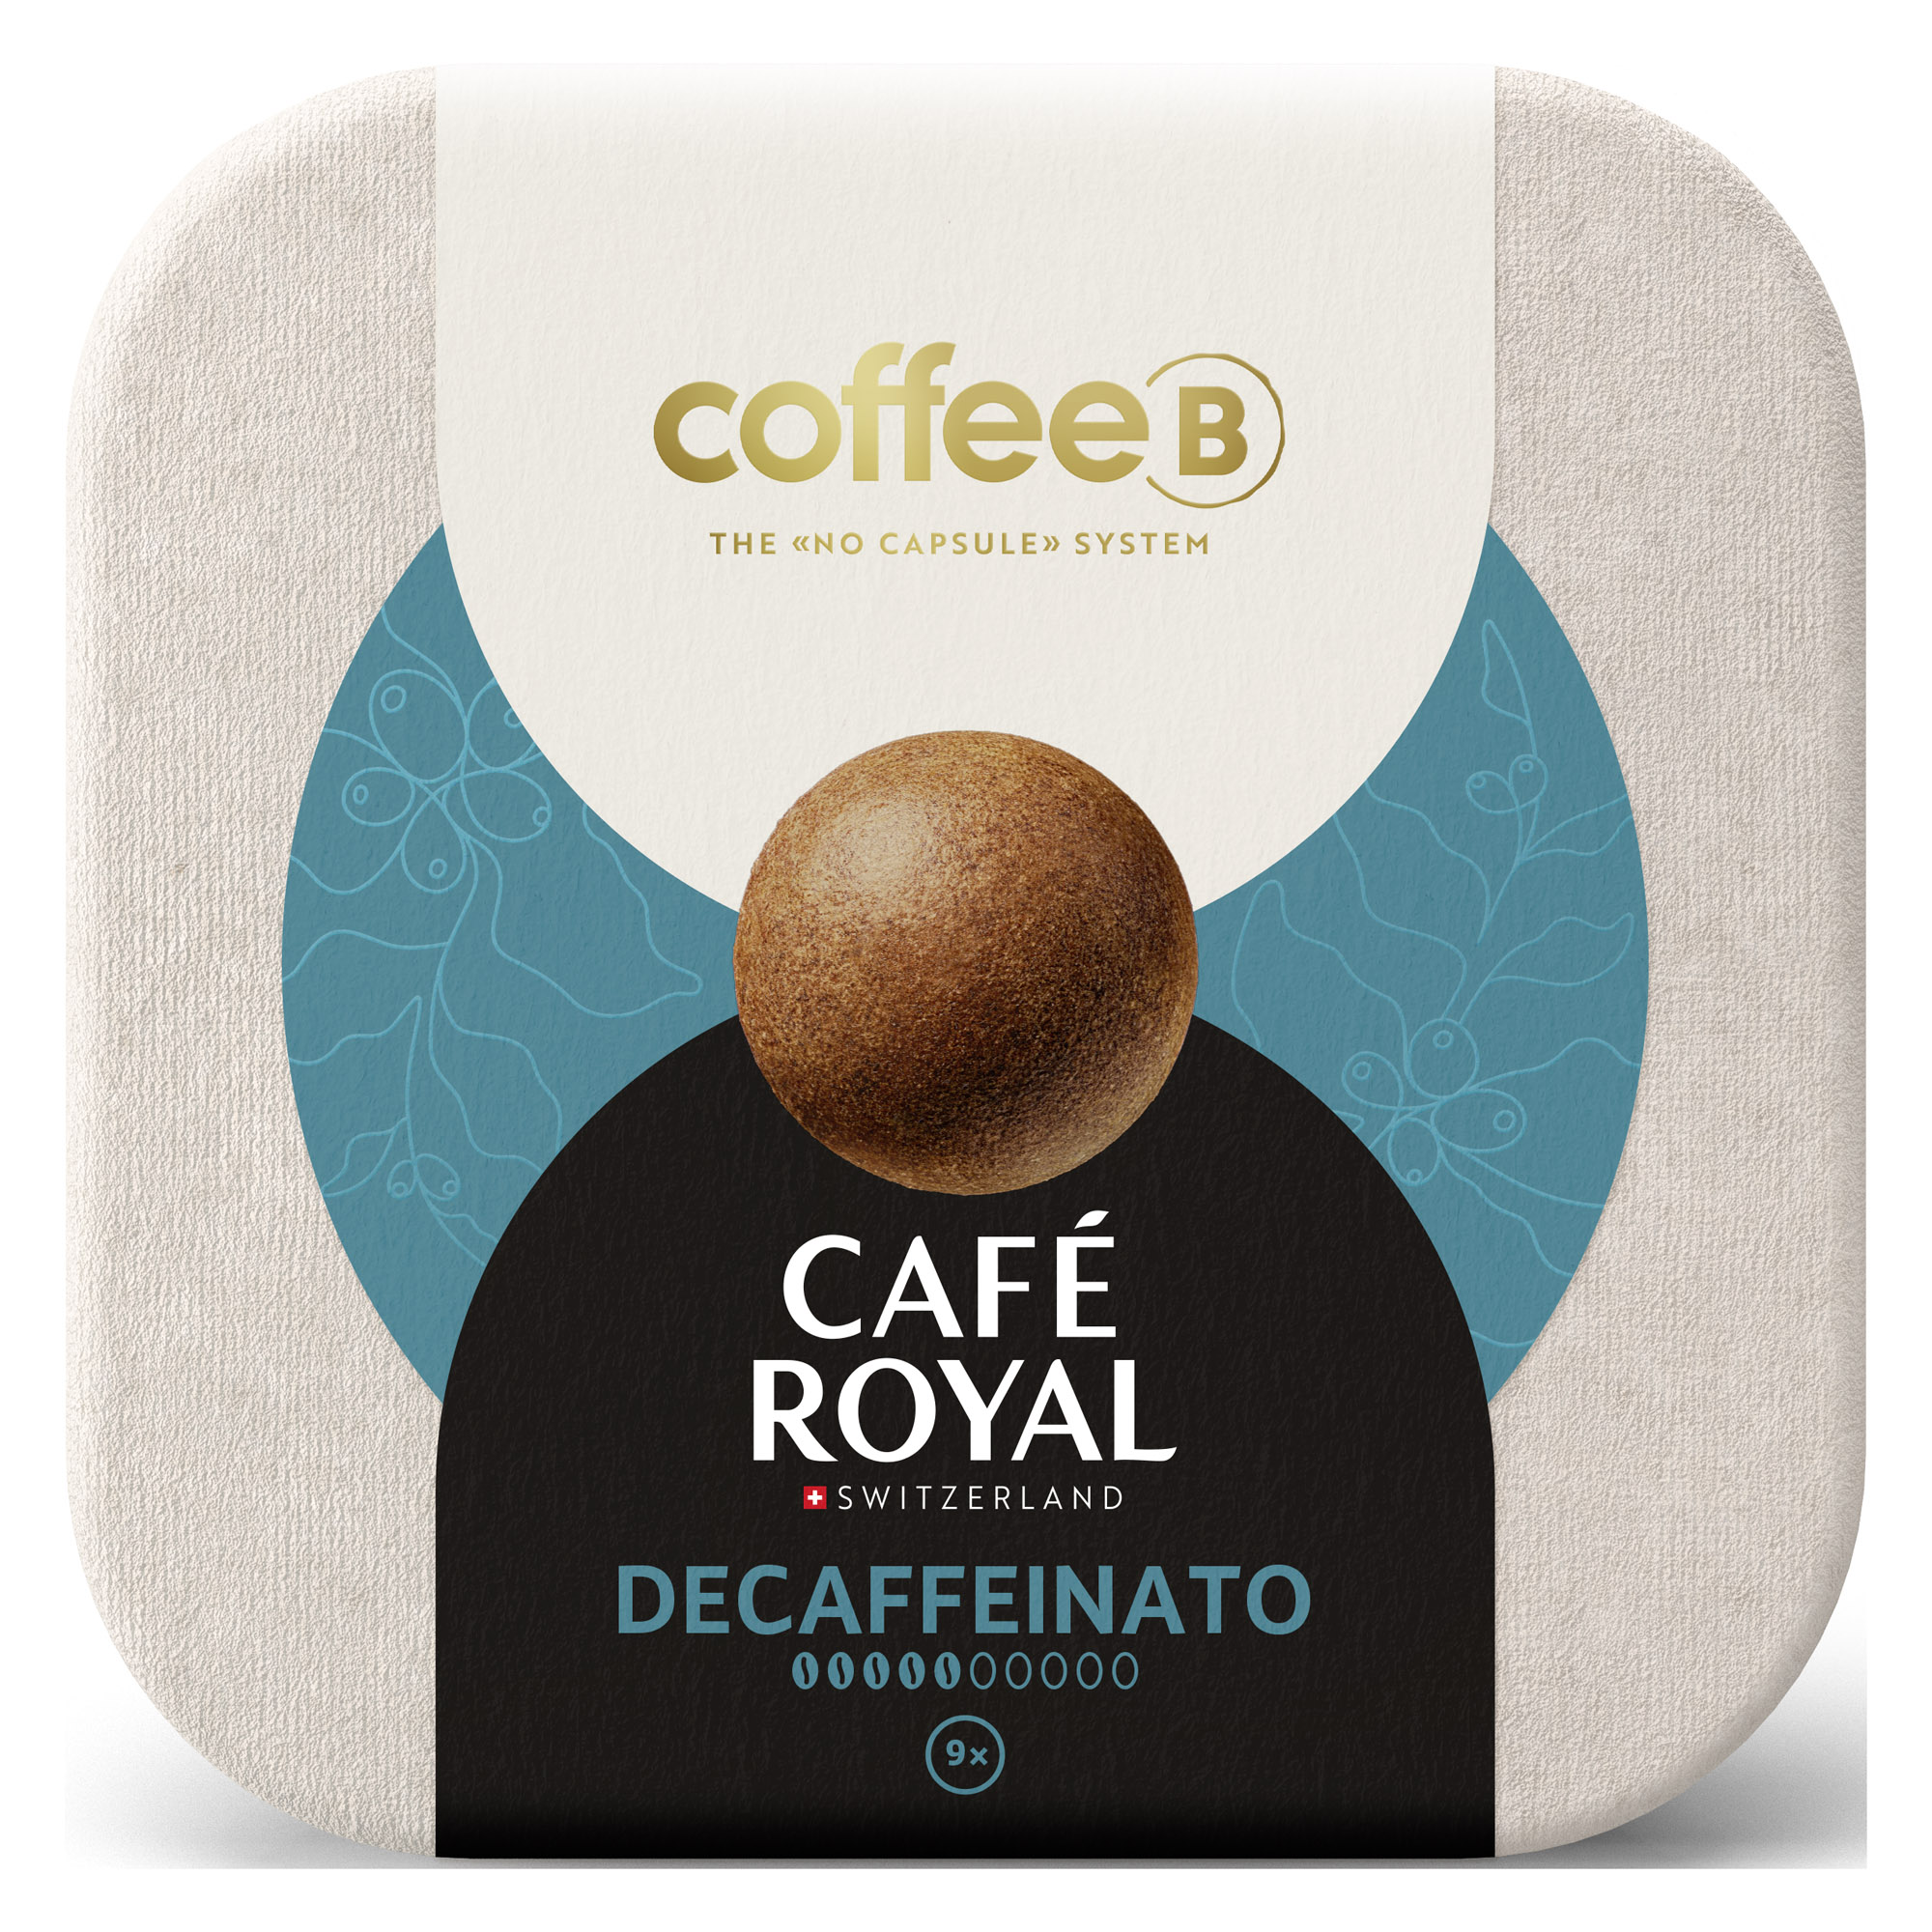 Boules de café Décafeiné Coffee B Café Royal - Boîte de 9